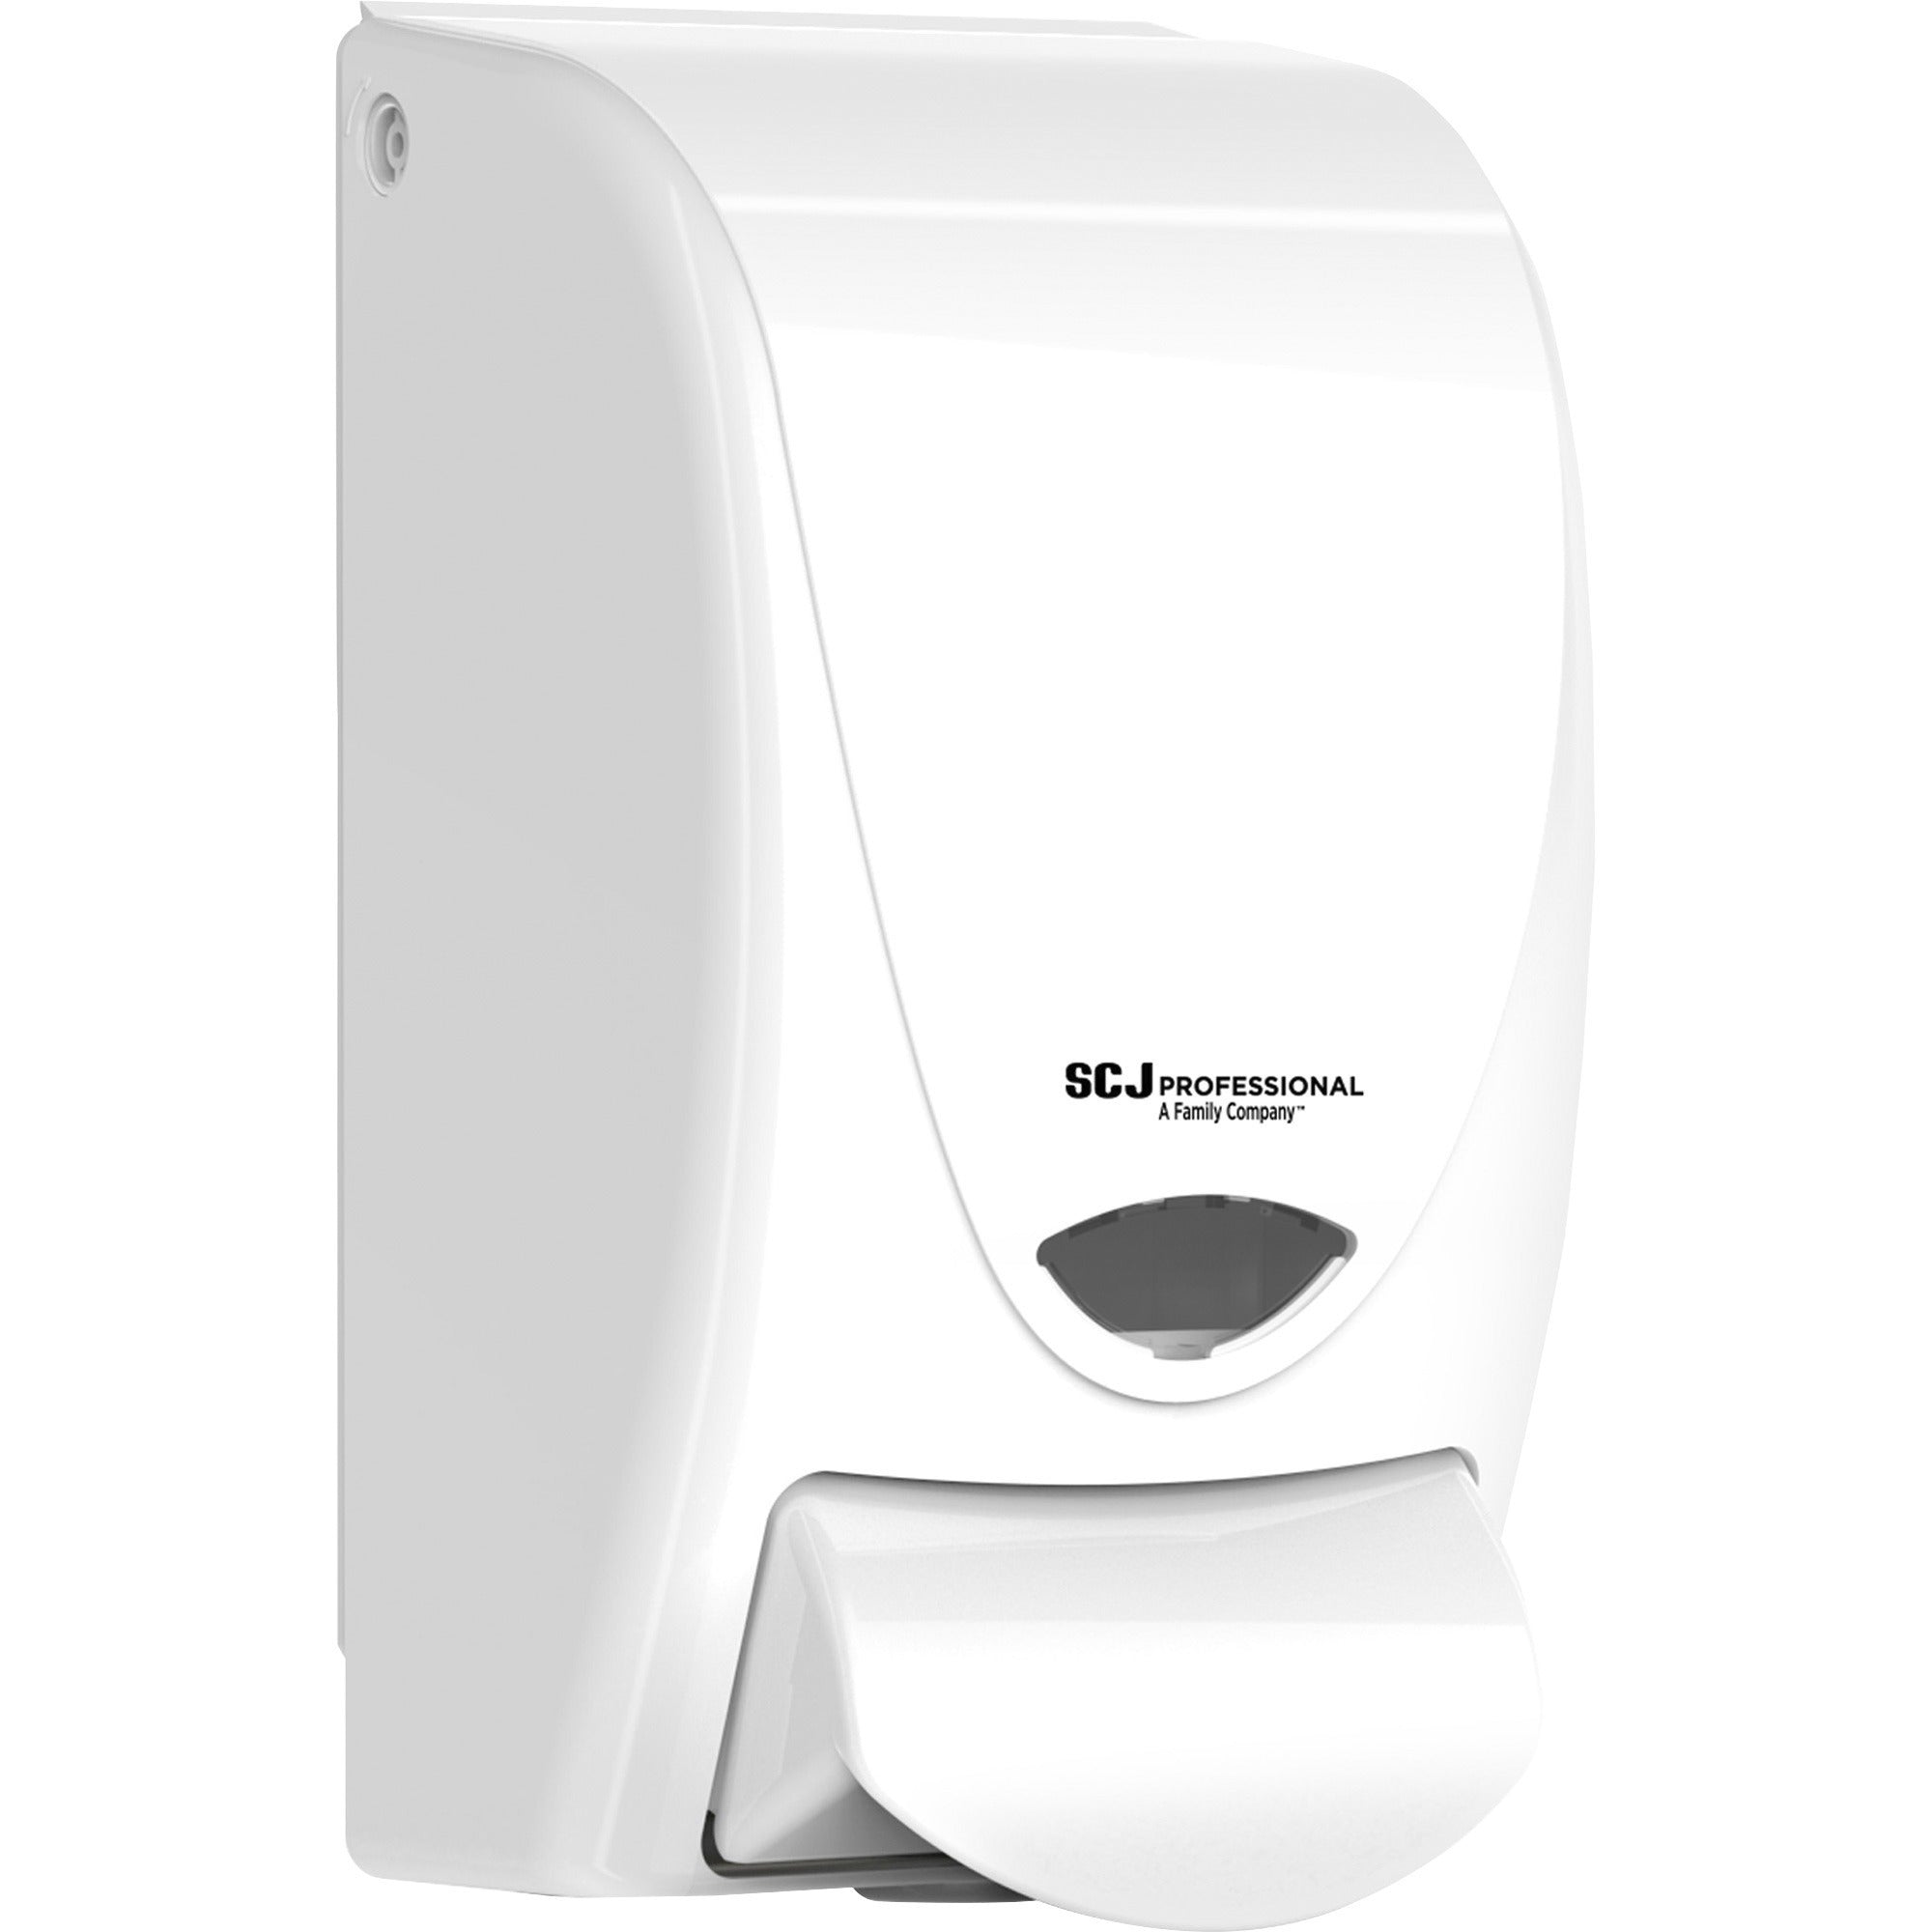 sc-johnson-proline-curve-manual-dispenser-manual-106-quart-capacity-durable-antimicrobial-anti-bacterial-white-1each_sjnwhb1lds - 1